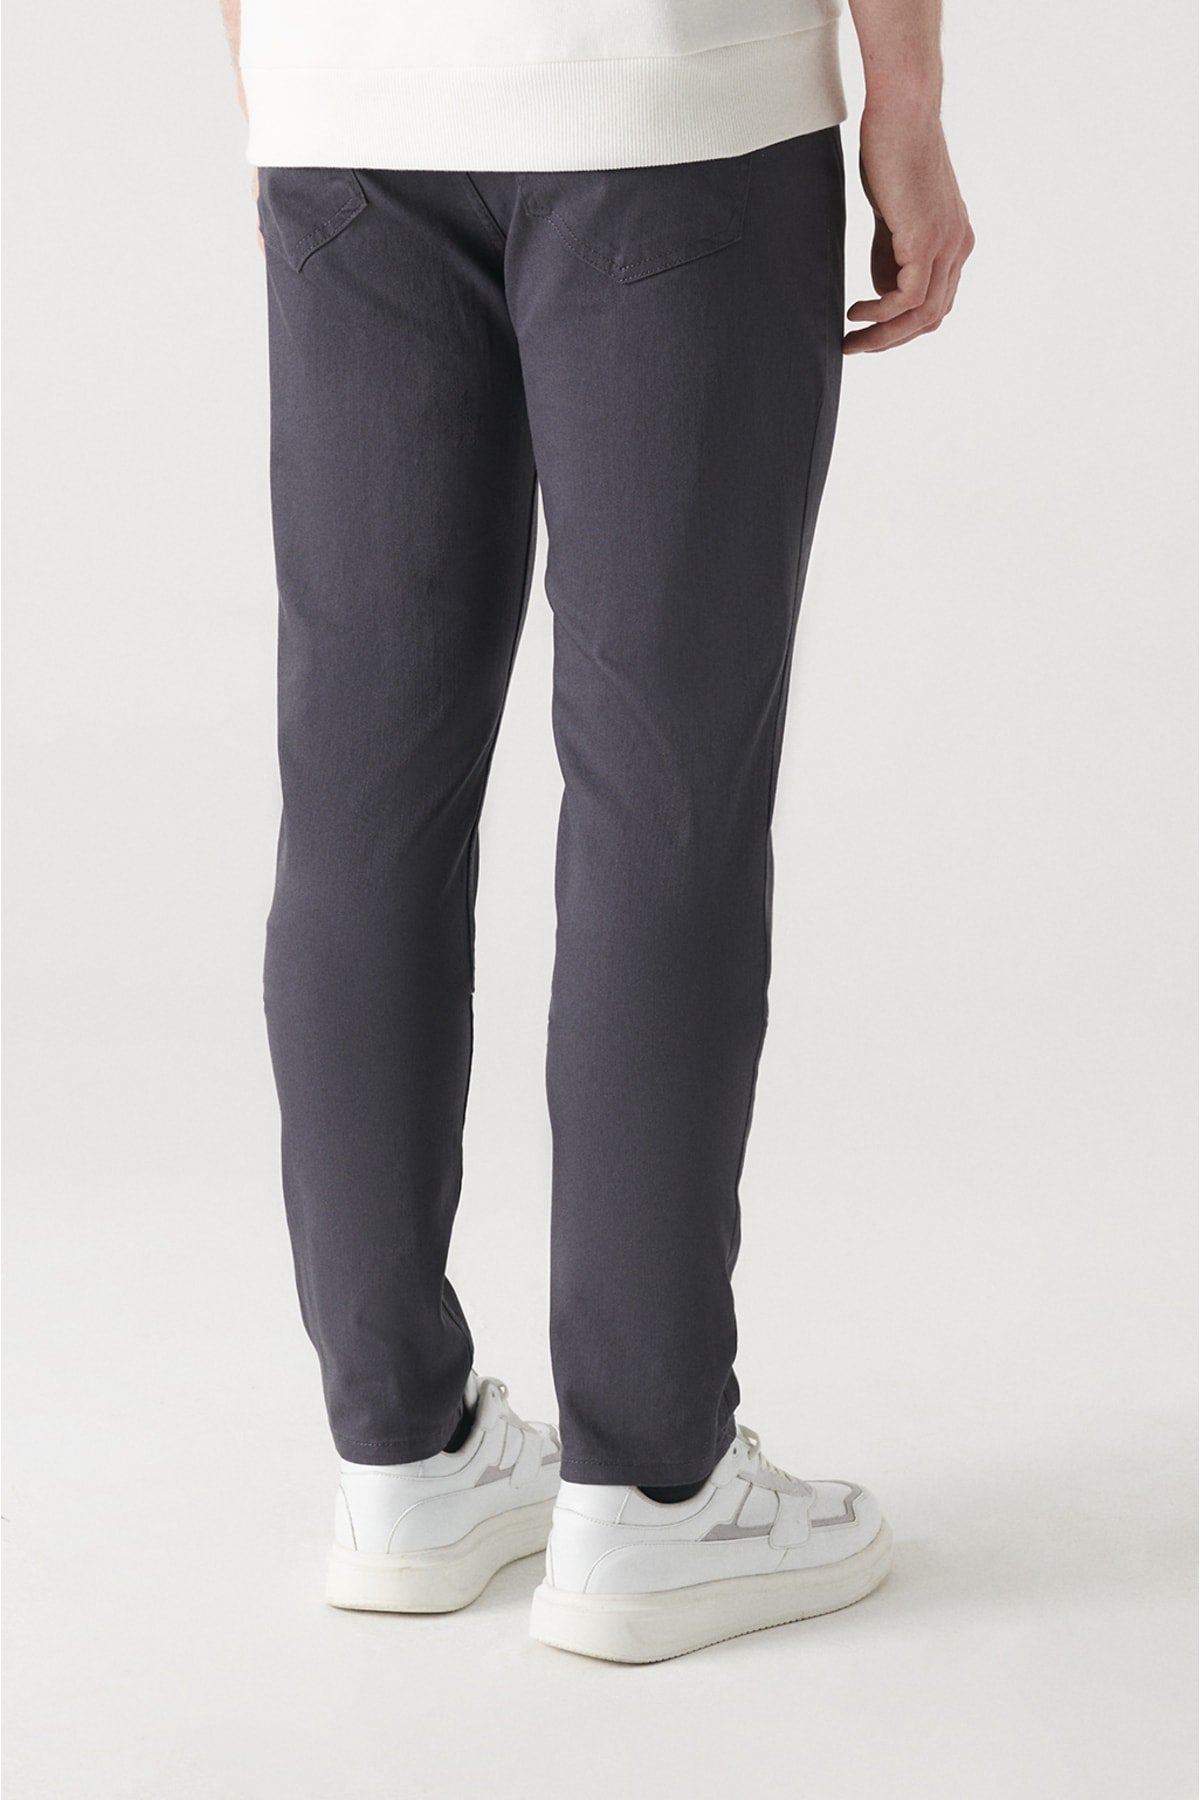 Men's Basic 5 Pocket Slim Fit Pants E003014